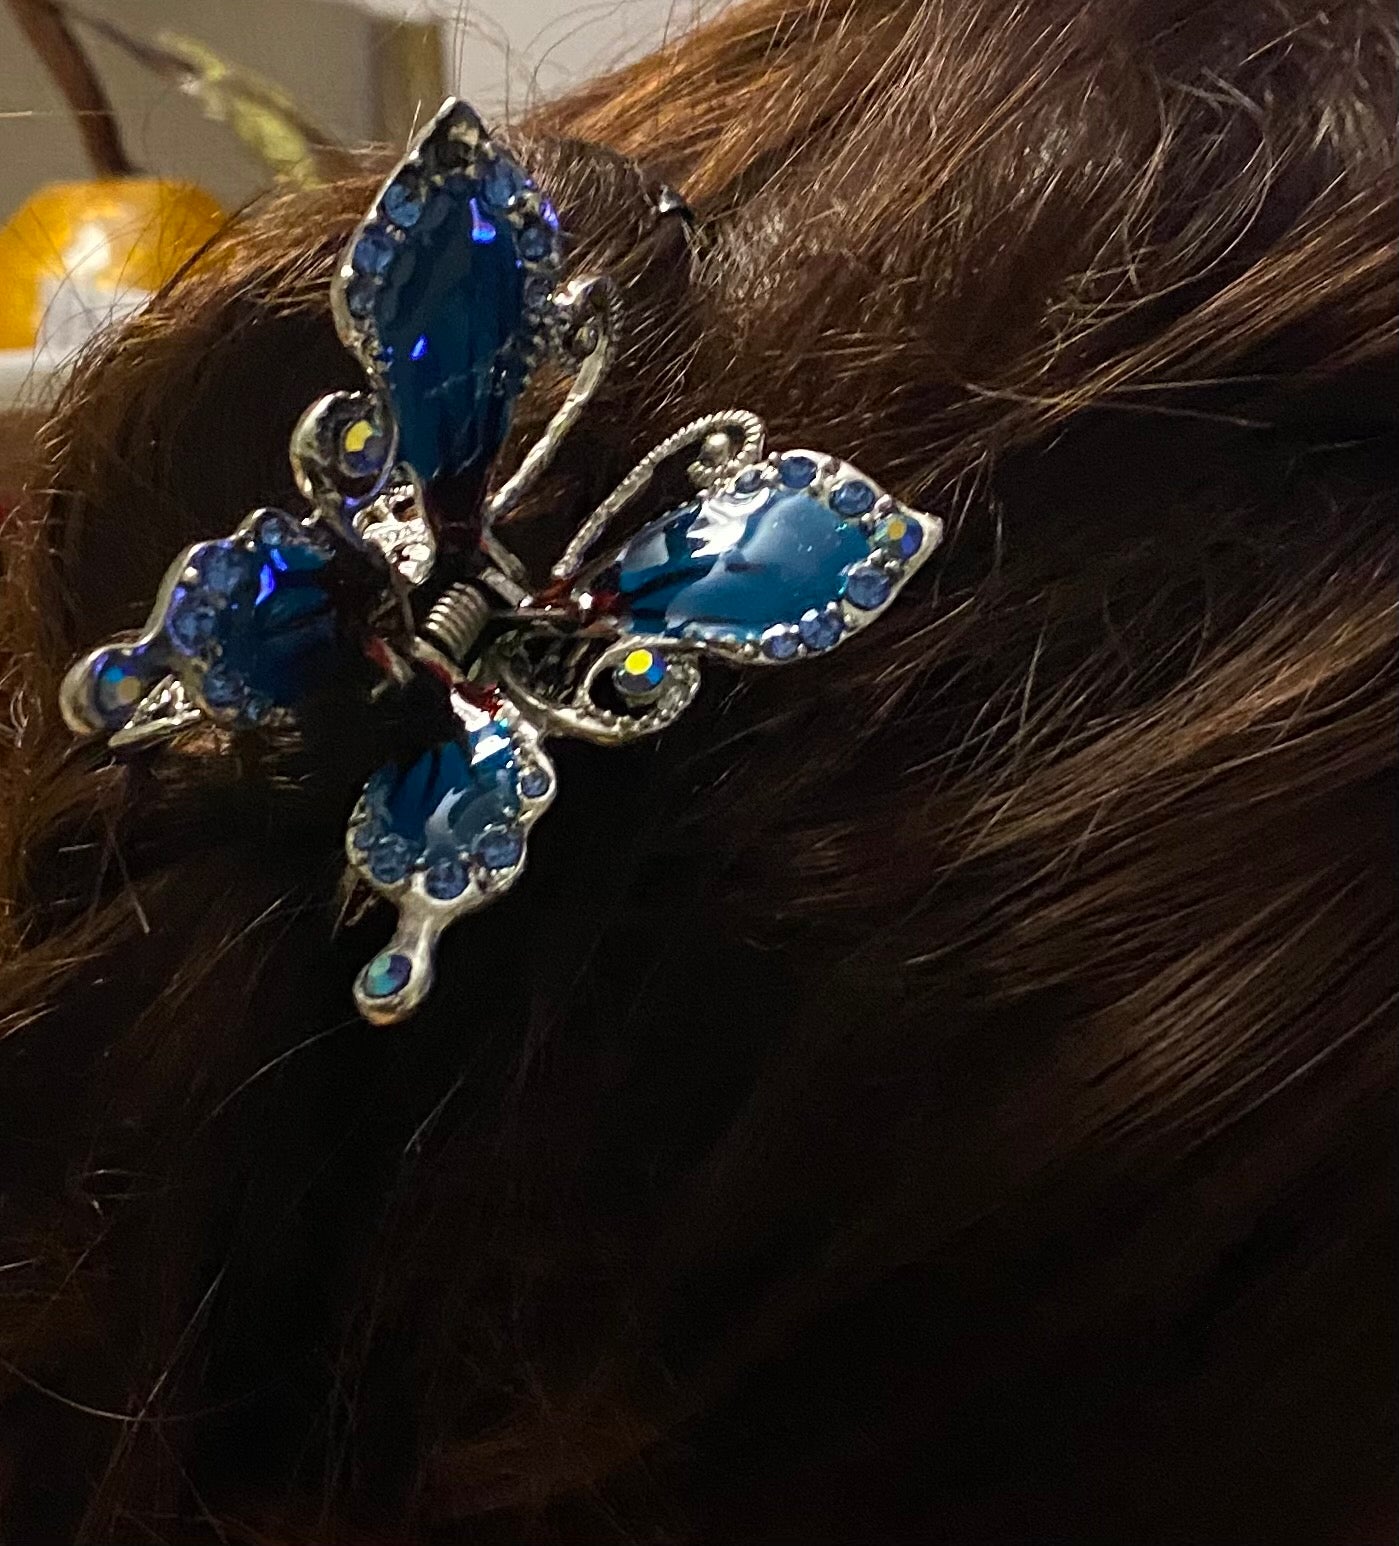 Butterfly hair clip